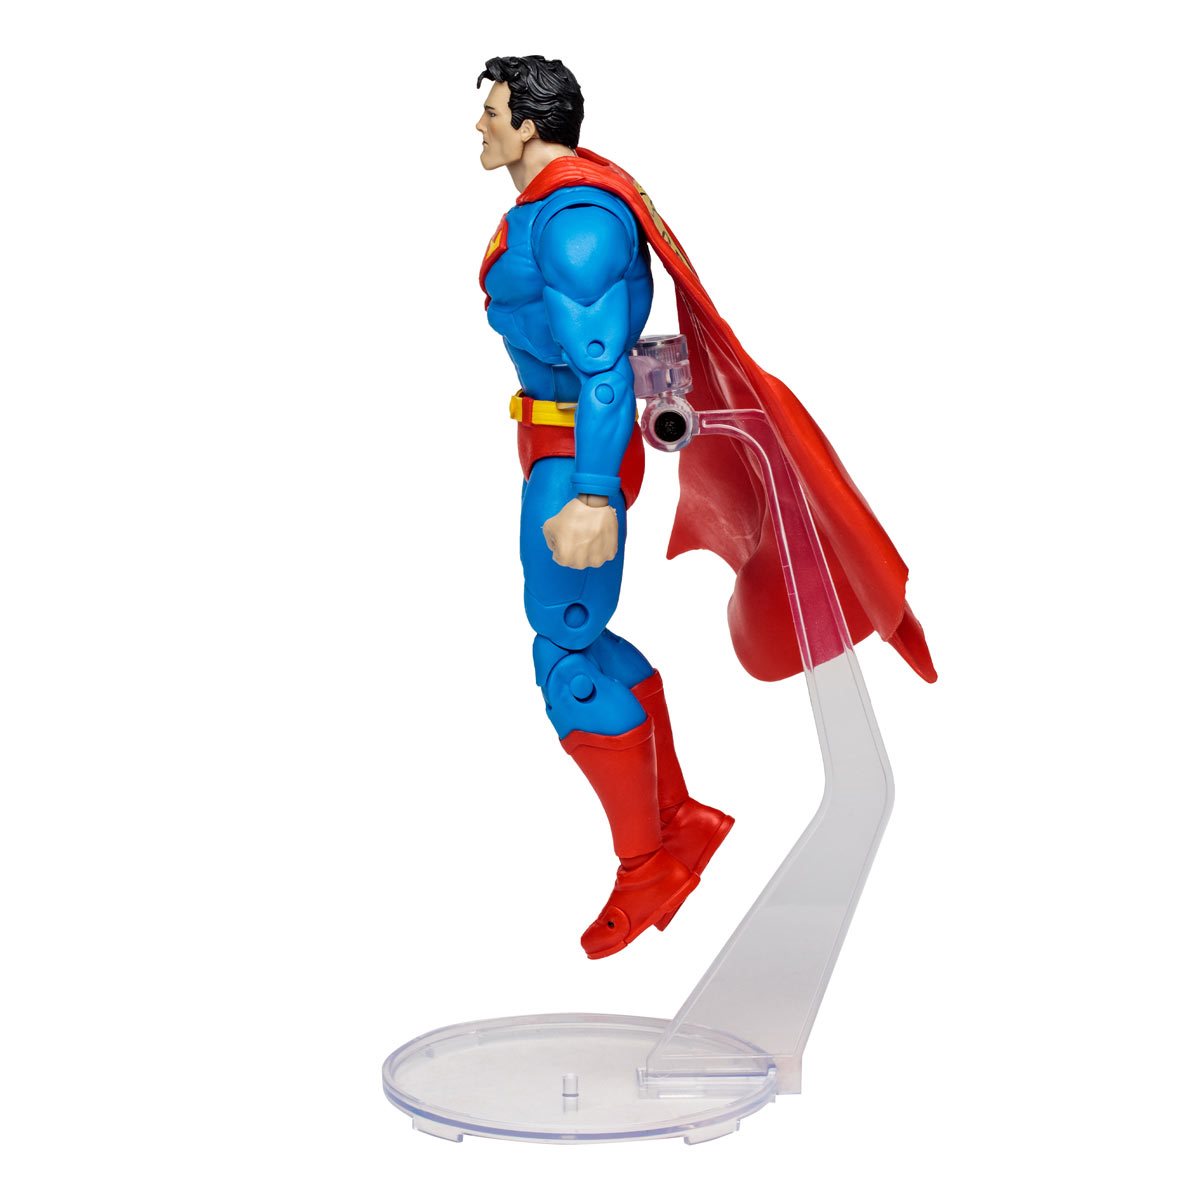 DC Multiverse Superman Hush 7-Inch Scale Action Figure